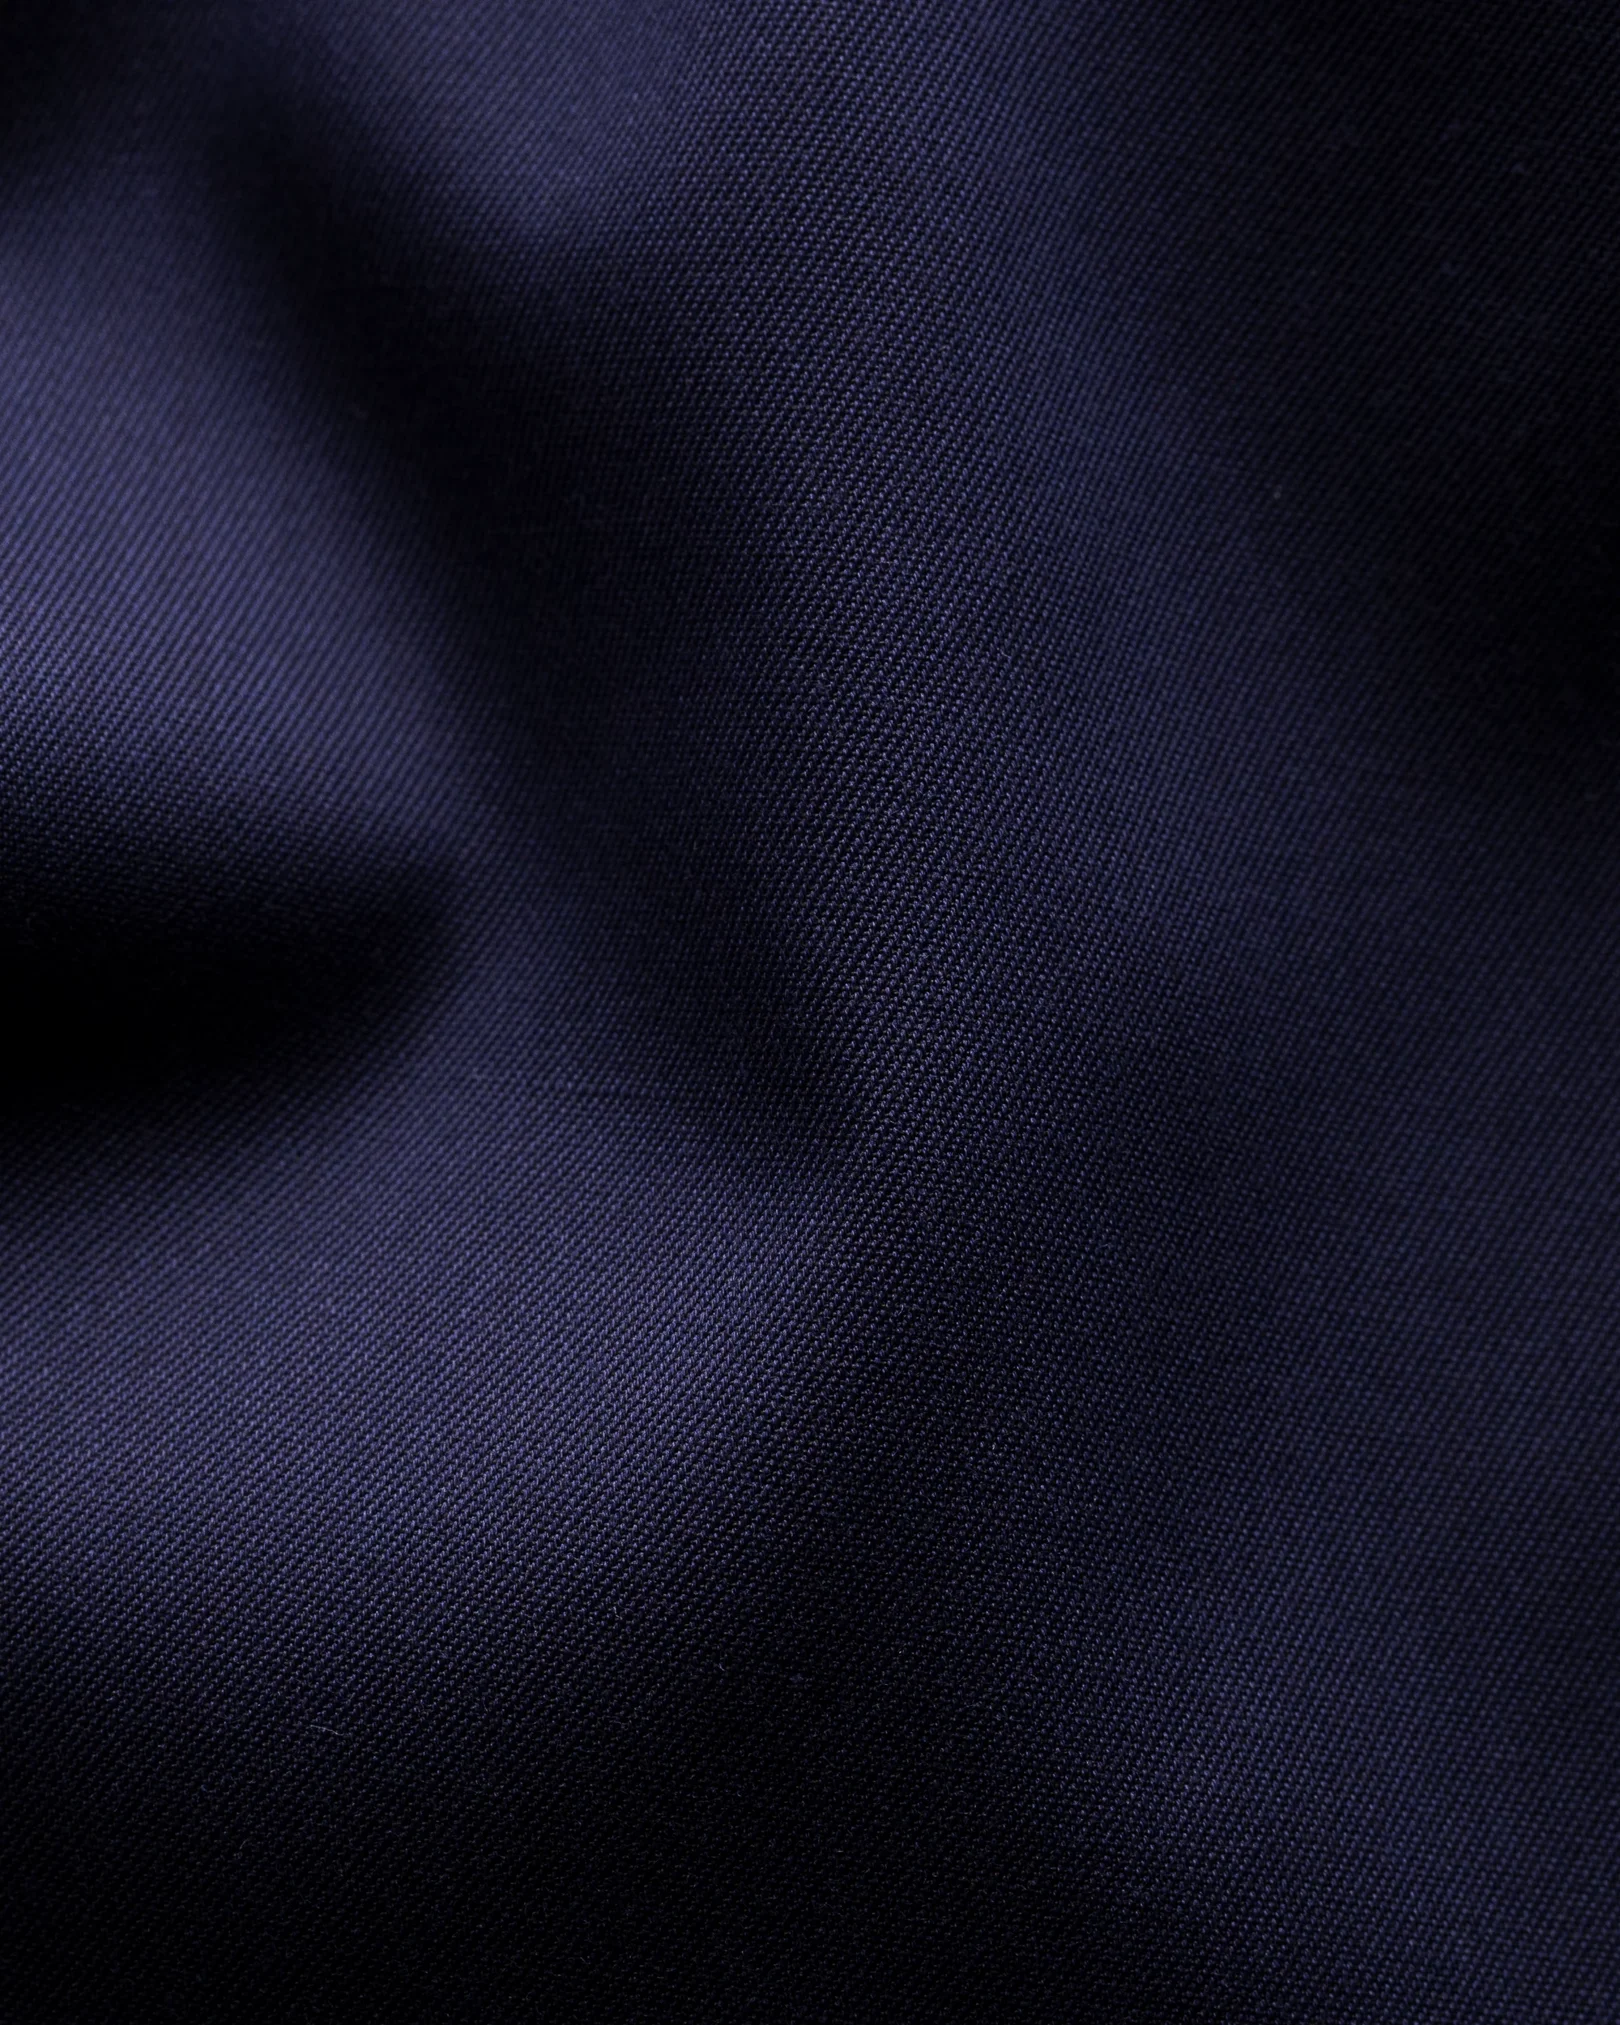 Eton - navy signature twill details shirt cut away